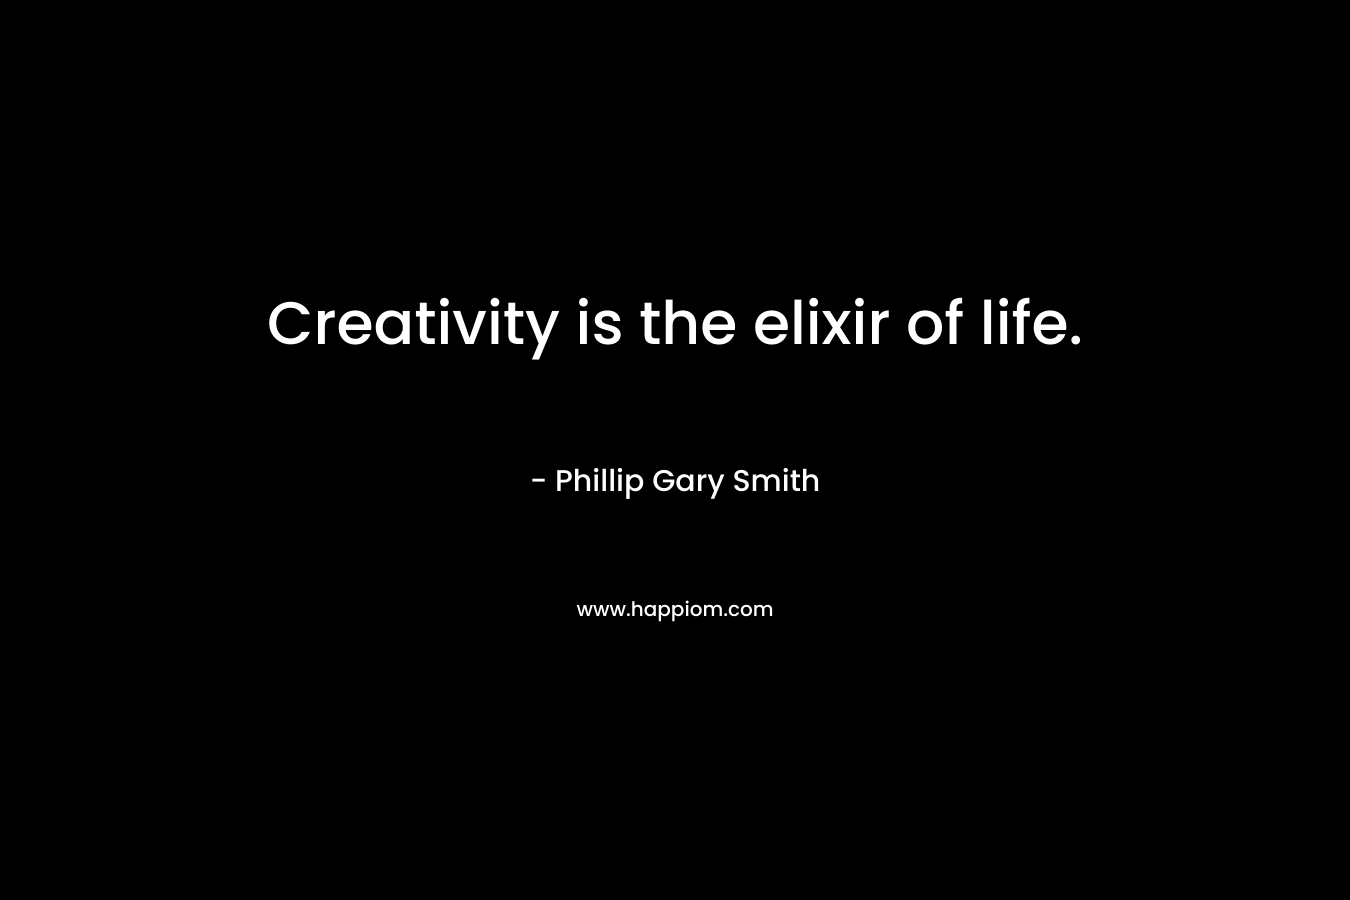 Creativity is the elixir of life.